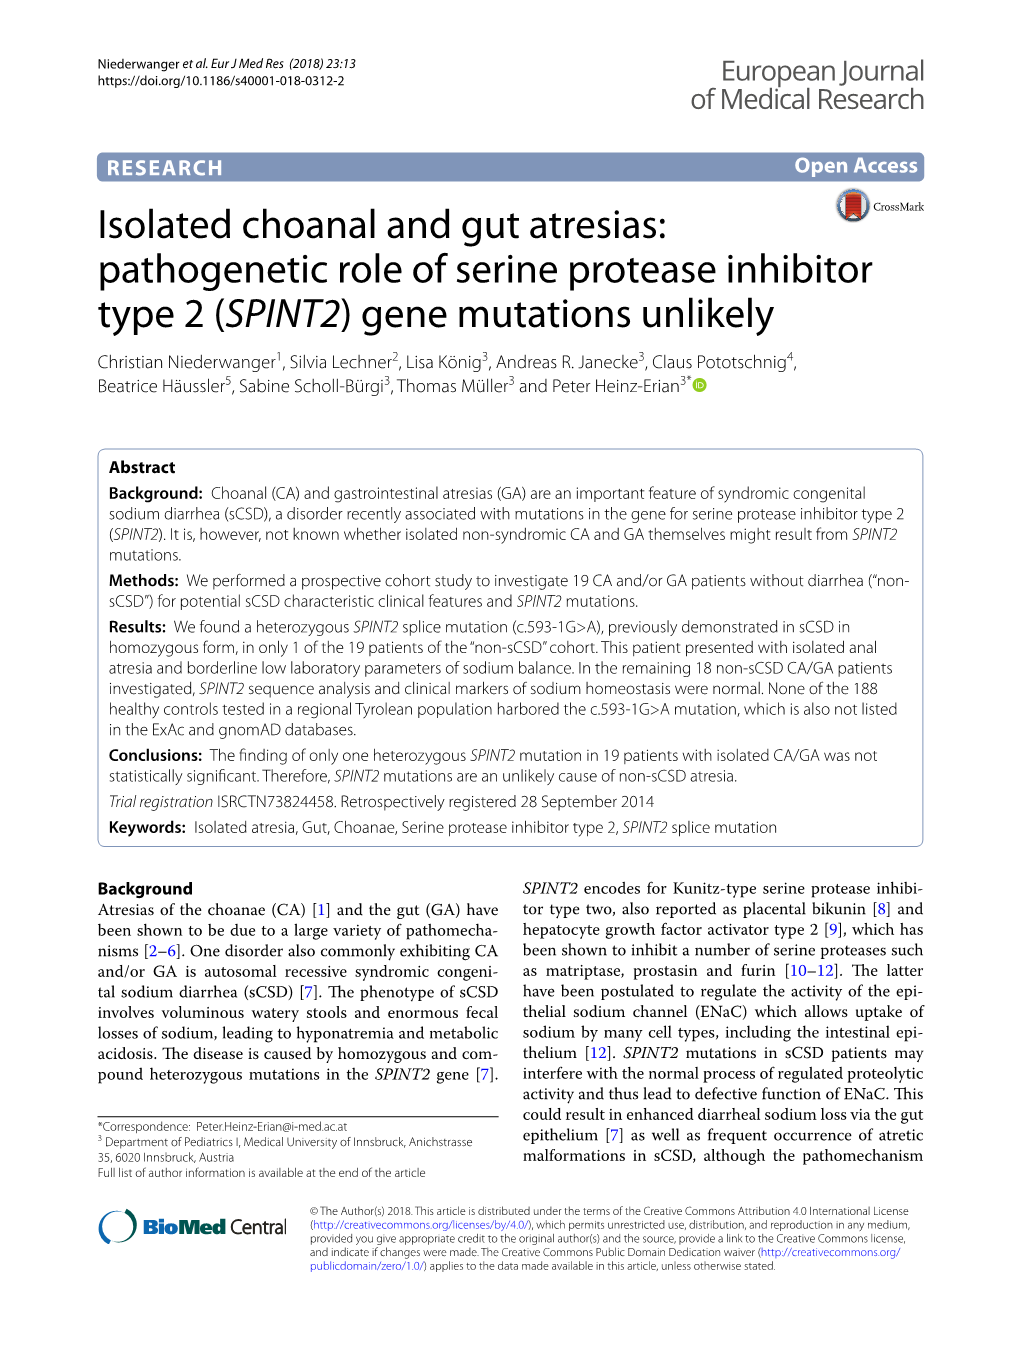 Pathogenetic Role of Serine Protease Inhibitor Type 2 (SPINT2) Gene Mutations Unlikely Christian Niederwanger1, Silvia Lechner2, Lisa König3, Andreas R